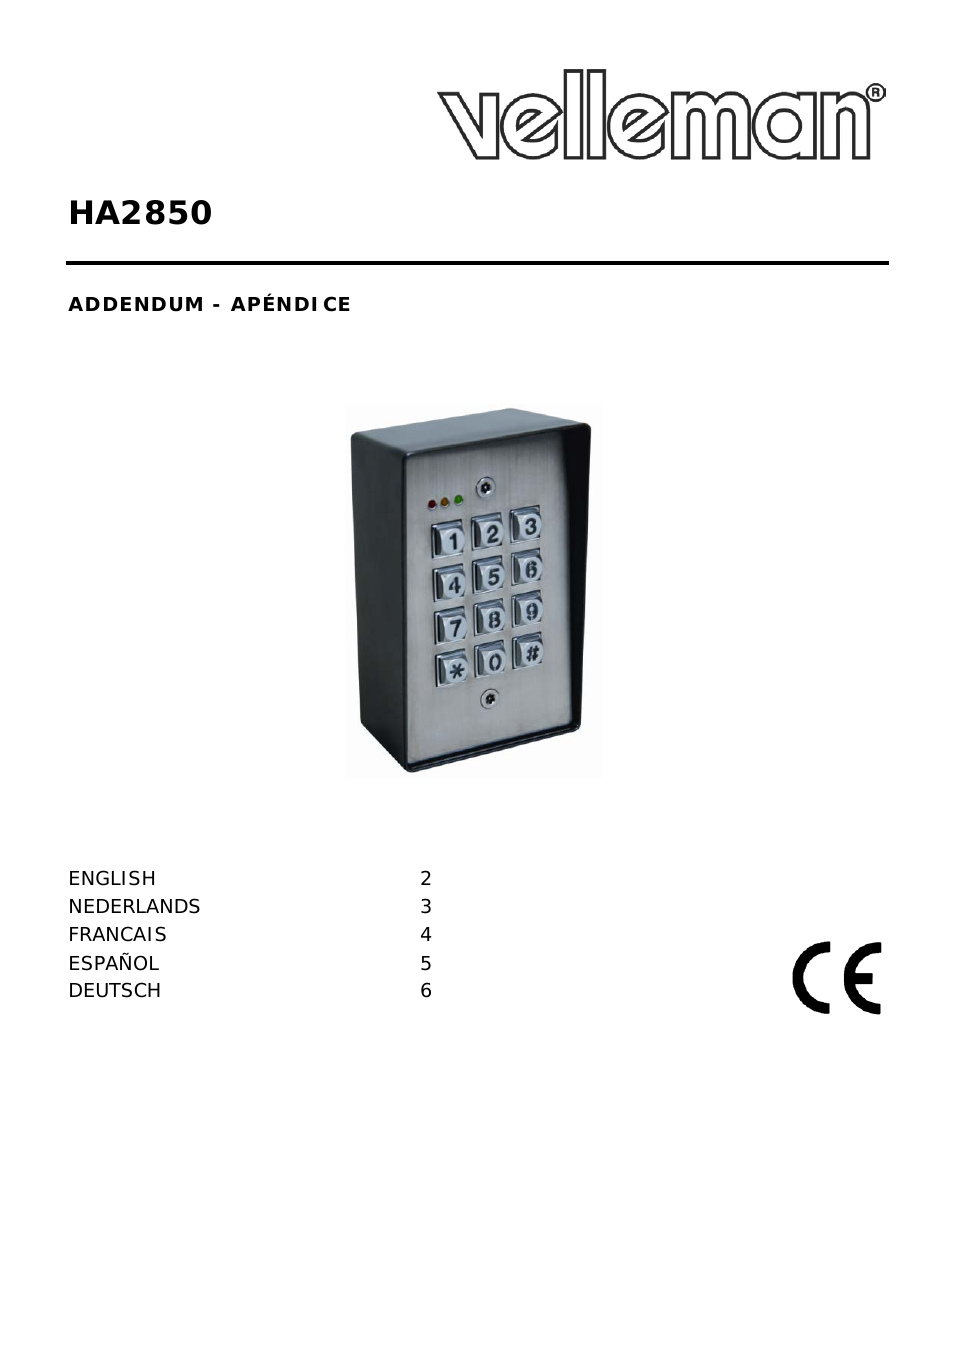 HAA2850 Setting Master Code and User Code